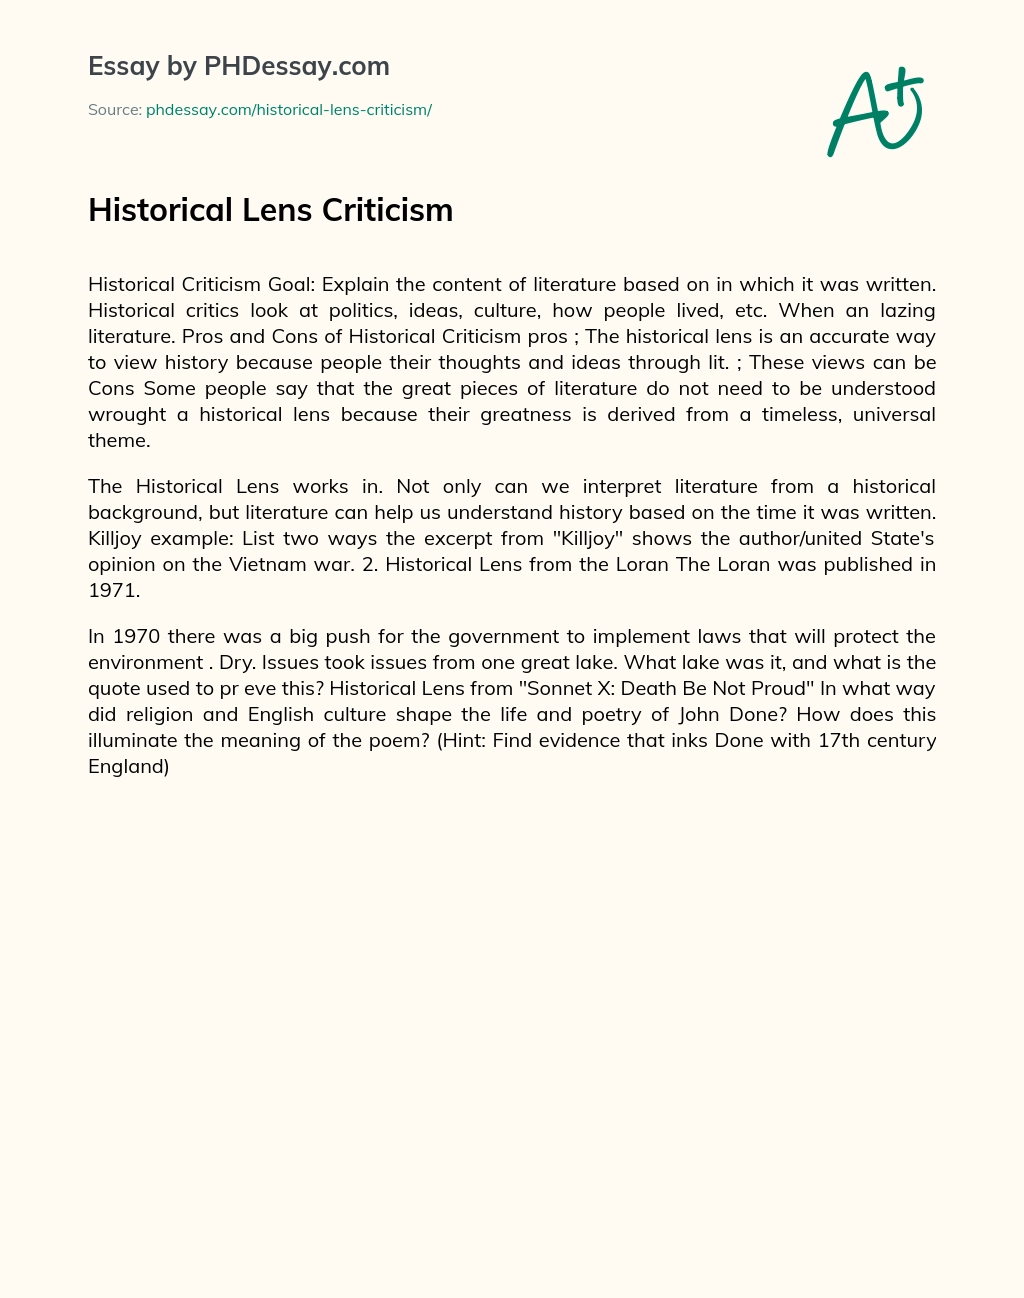 Historical Lens Criticism essay